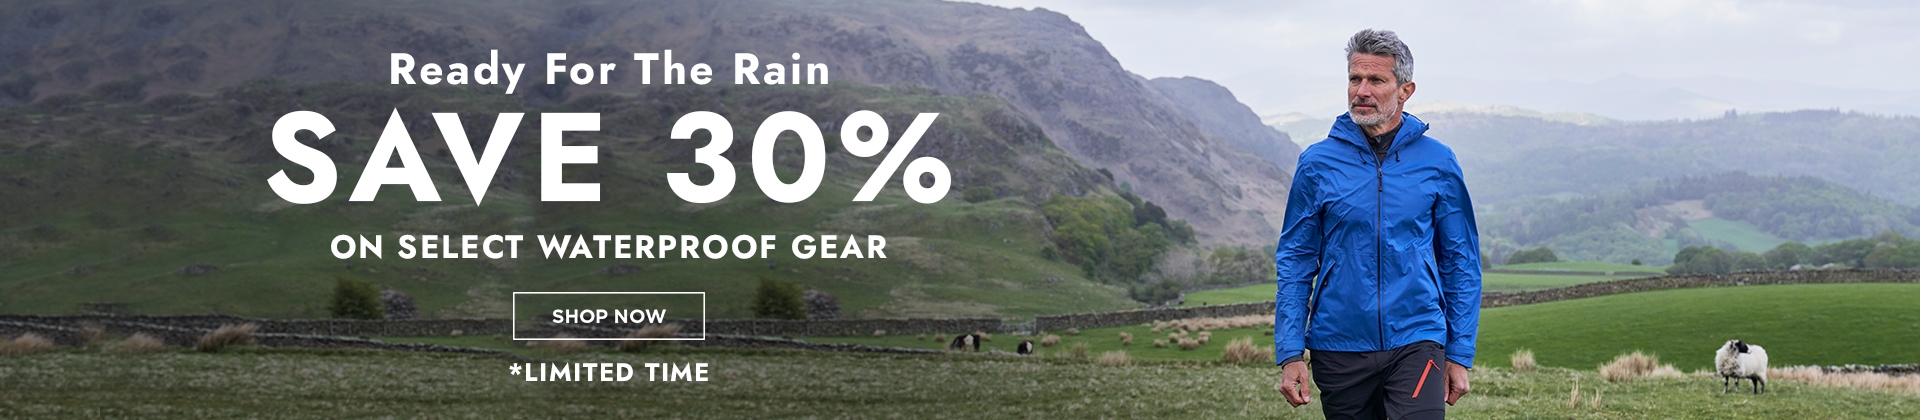 H1: Save 30% On Select Waterproof Gear